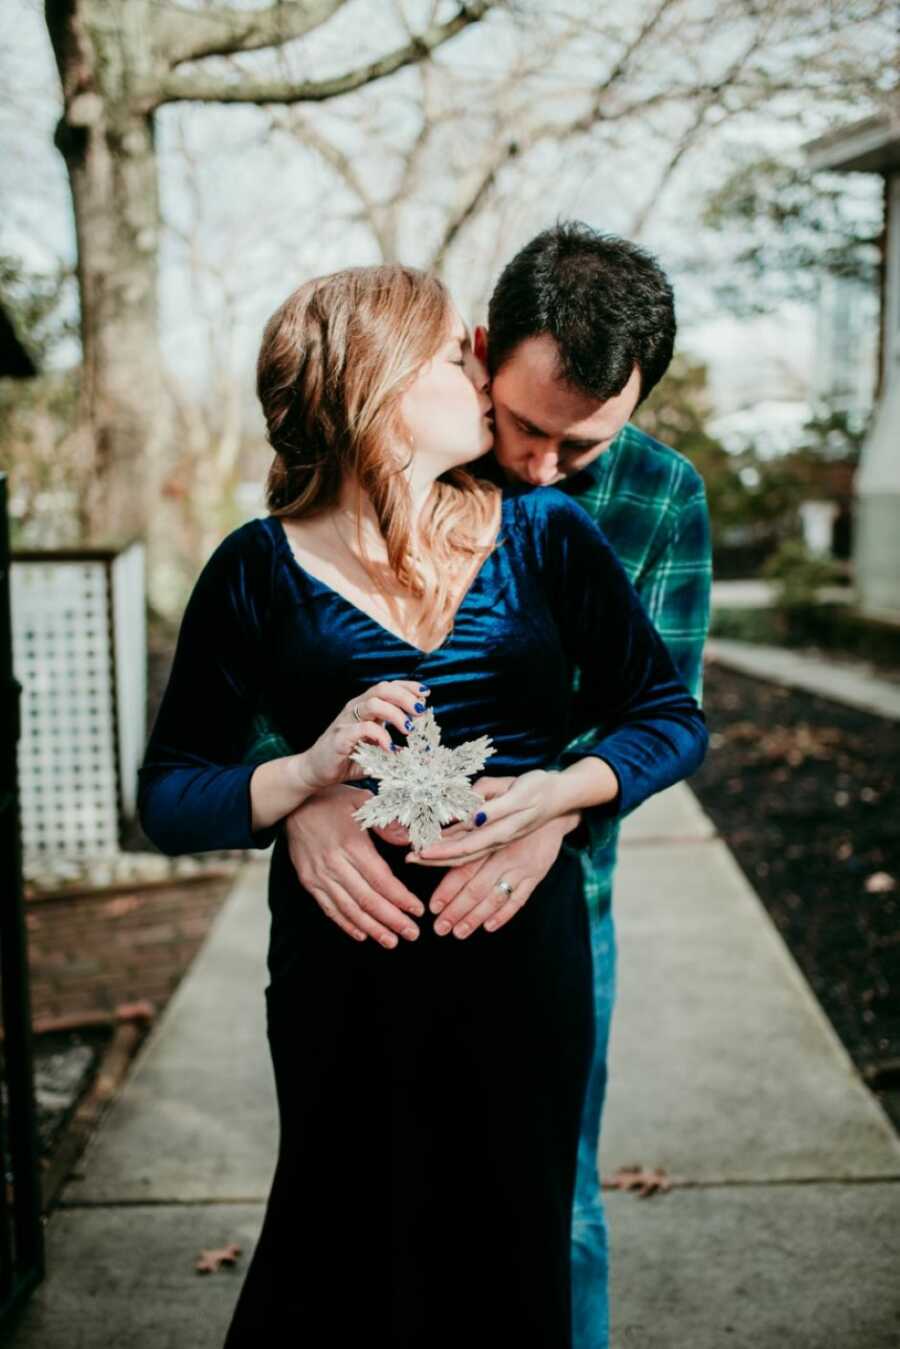 Couple celebrating their pregnancy take winter-themed photoshoot for their snowflake baby